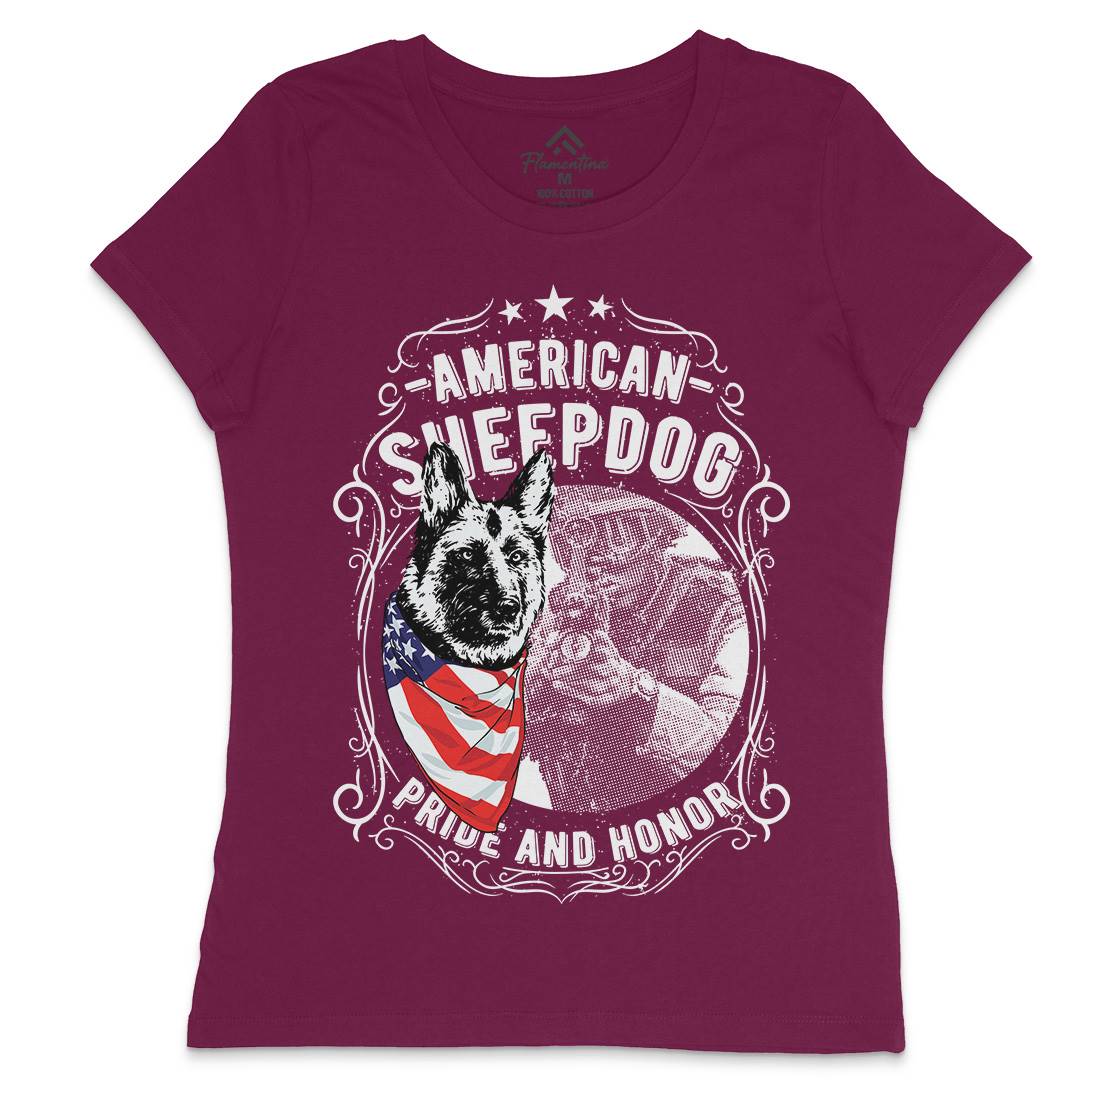 Sheepdog Womens Crew Neck T-Shirt American C904